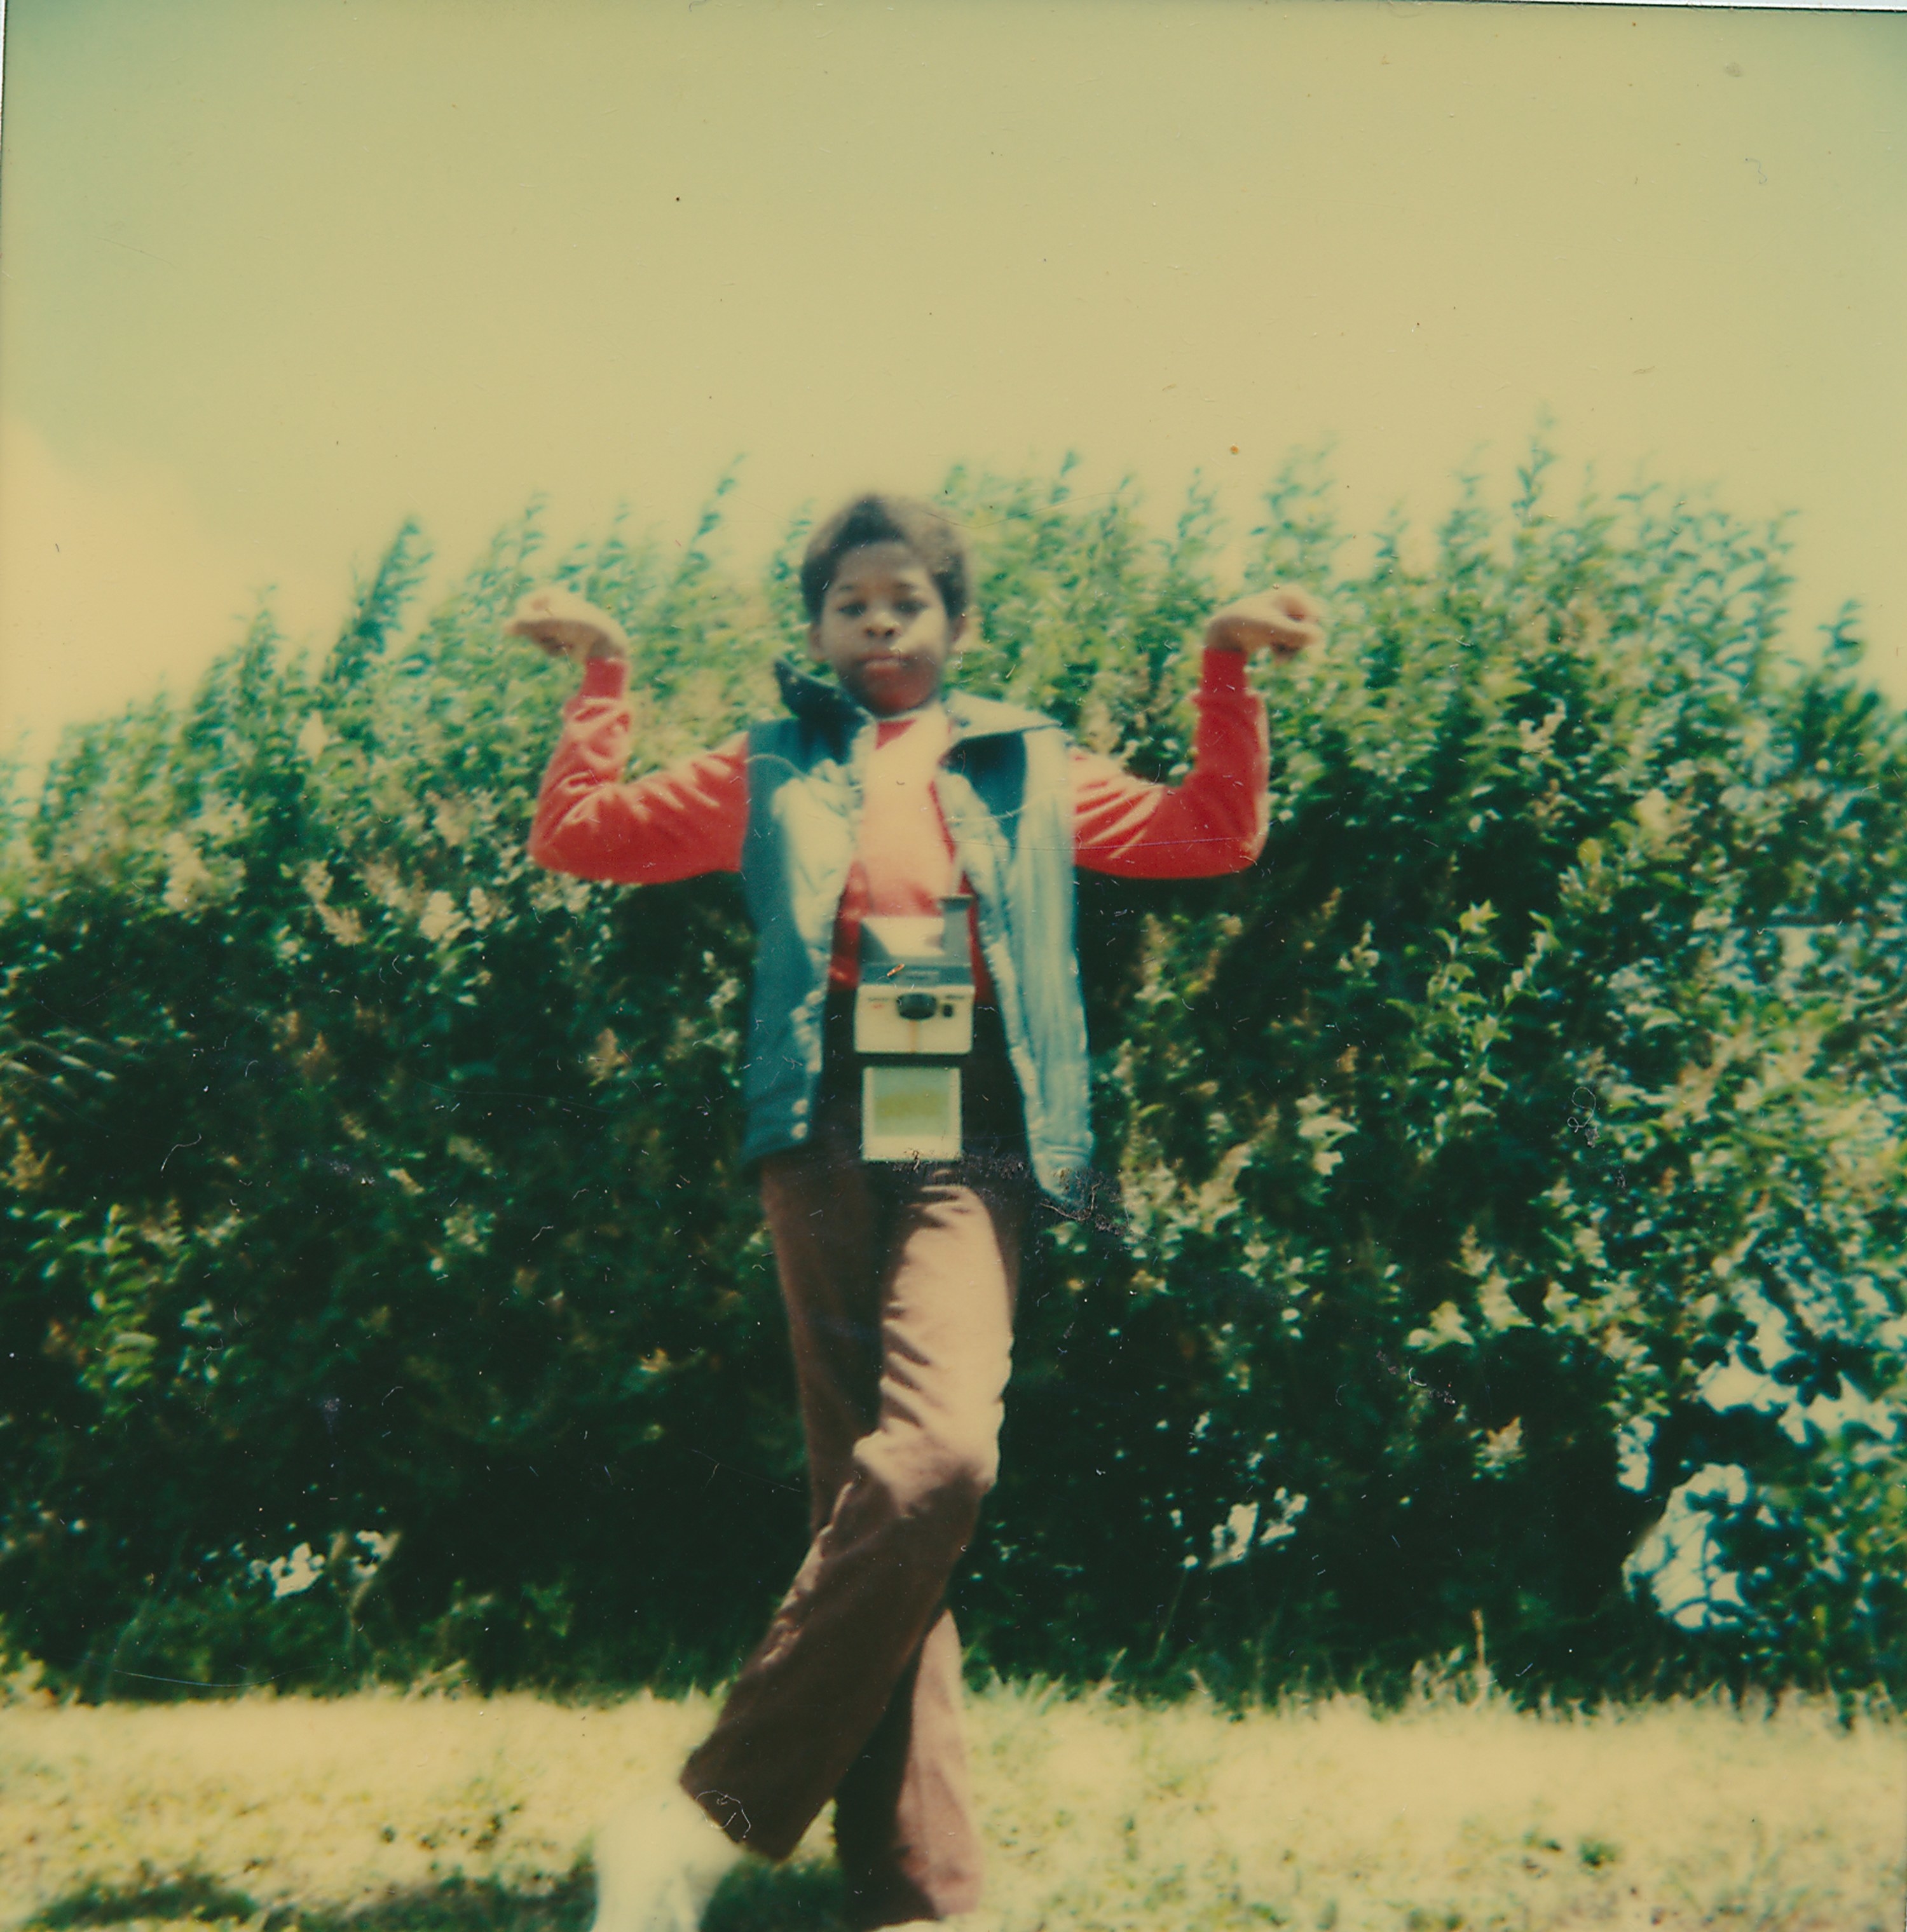 Polaroid photograph of a young Black boy striking an Egyptian style pose